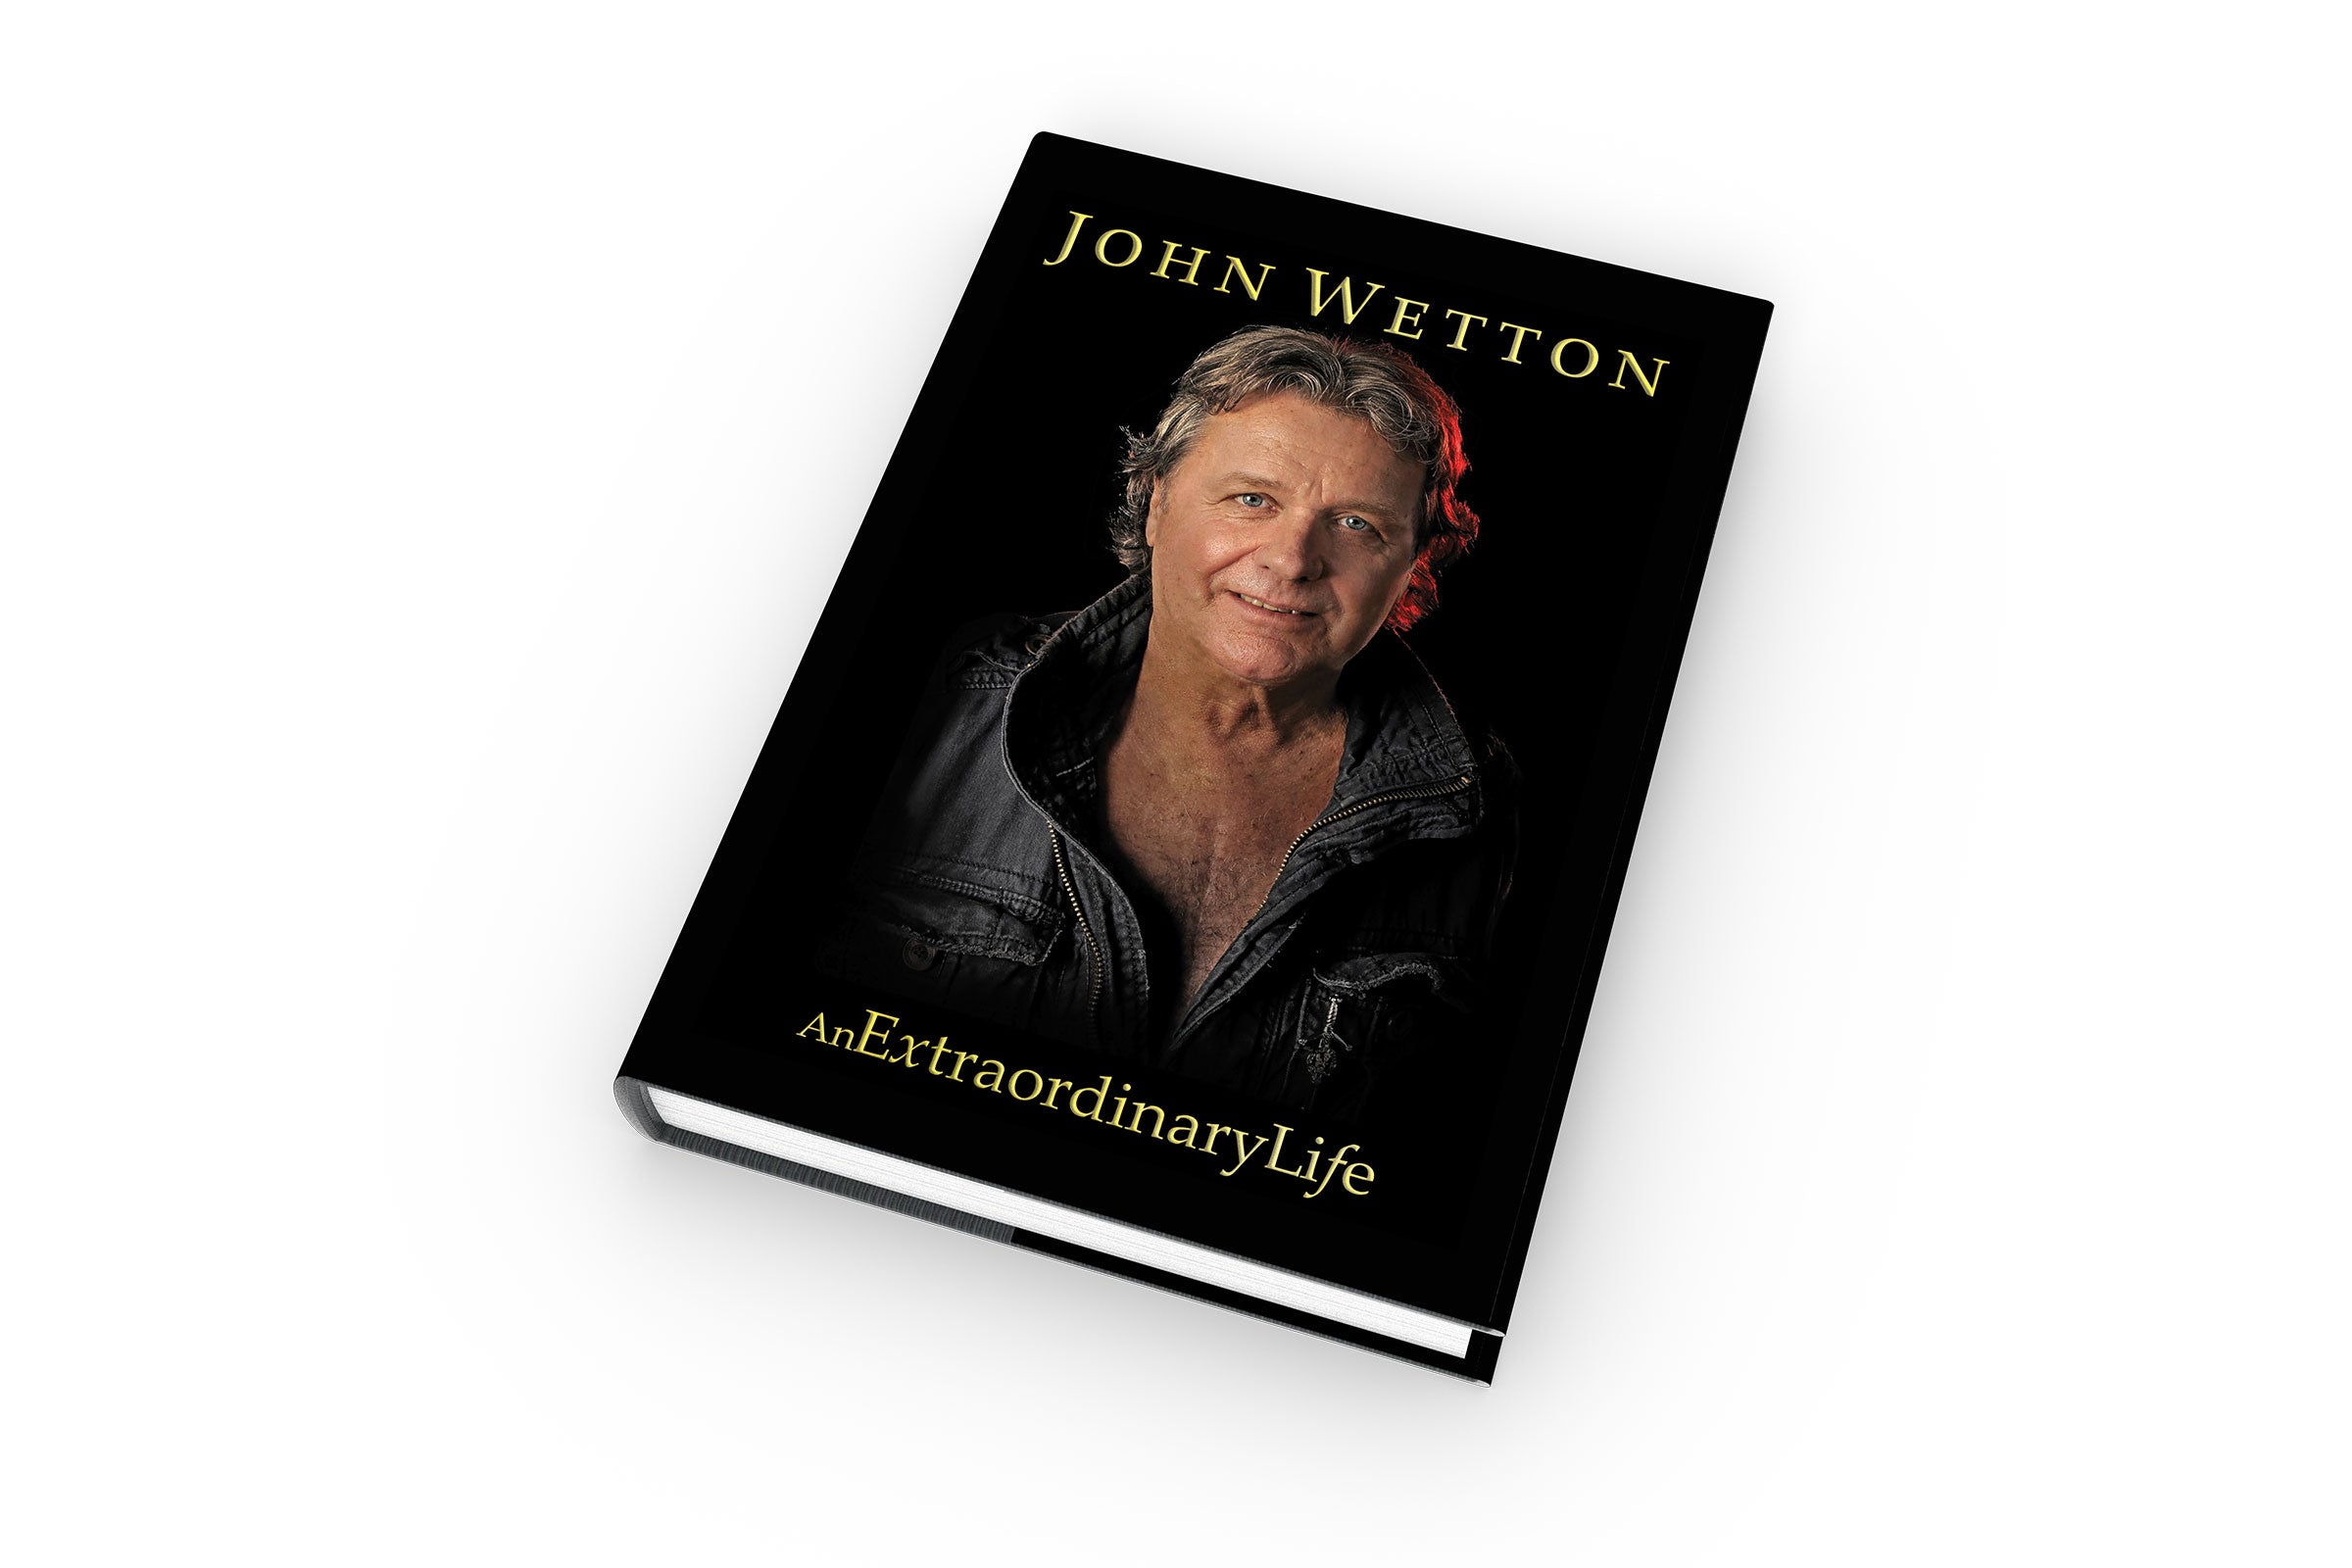 John Wetton An Extraordinary Life (Signature Edition)